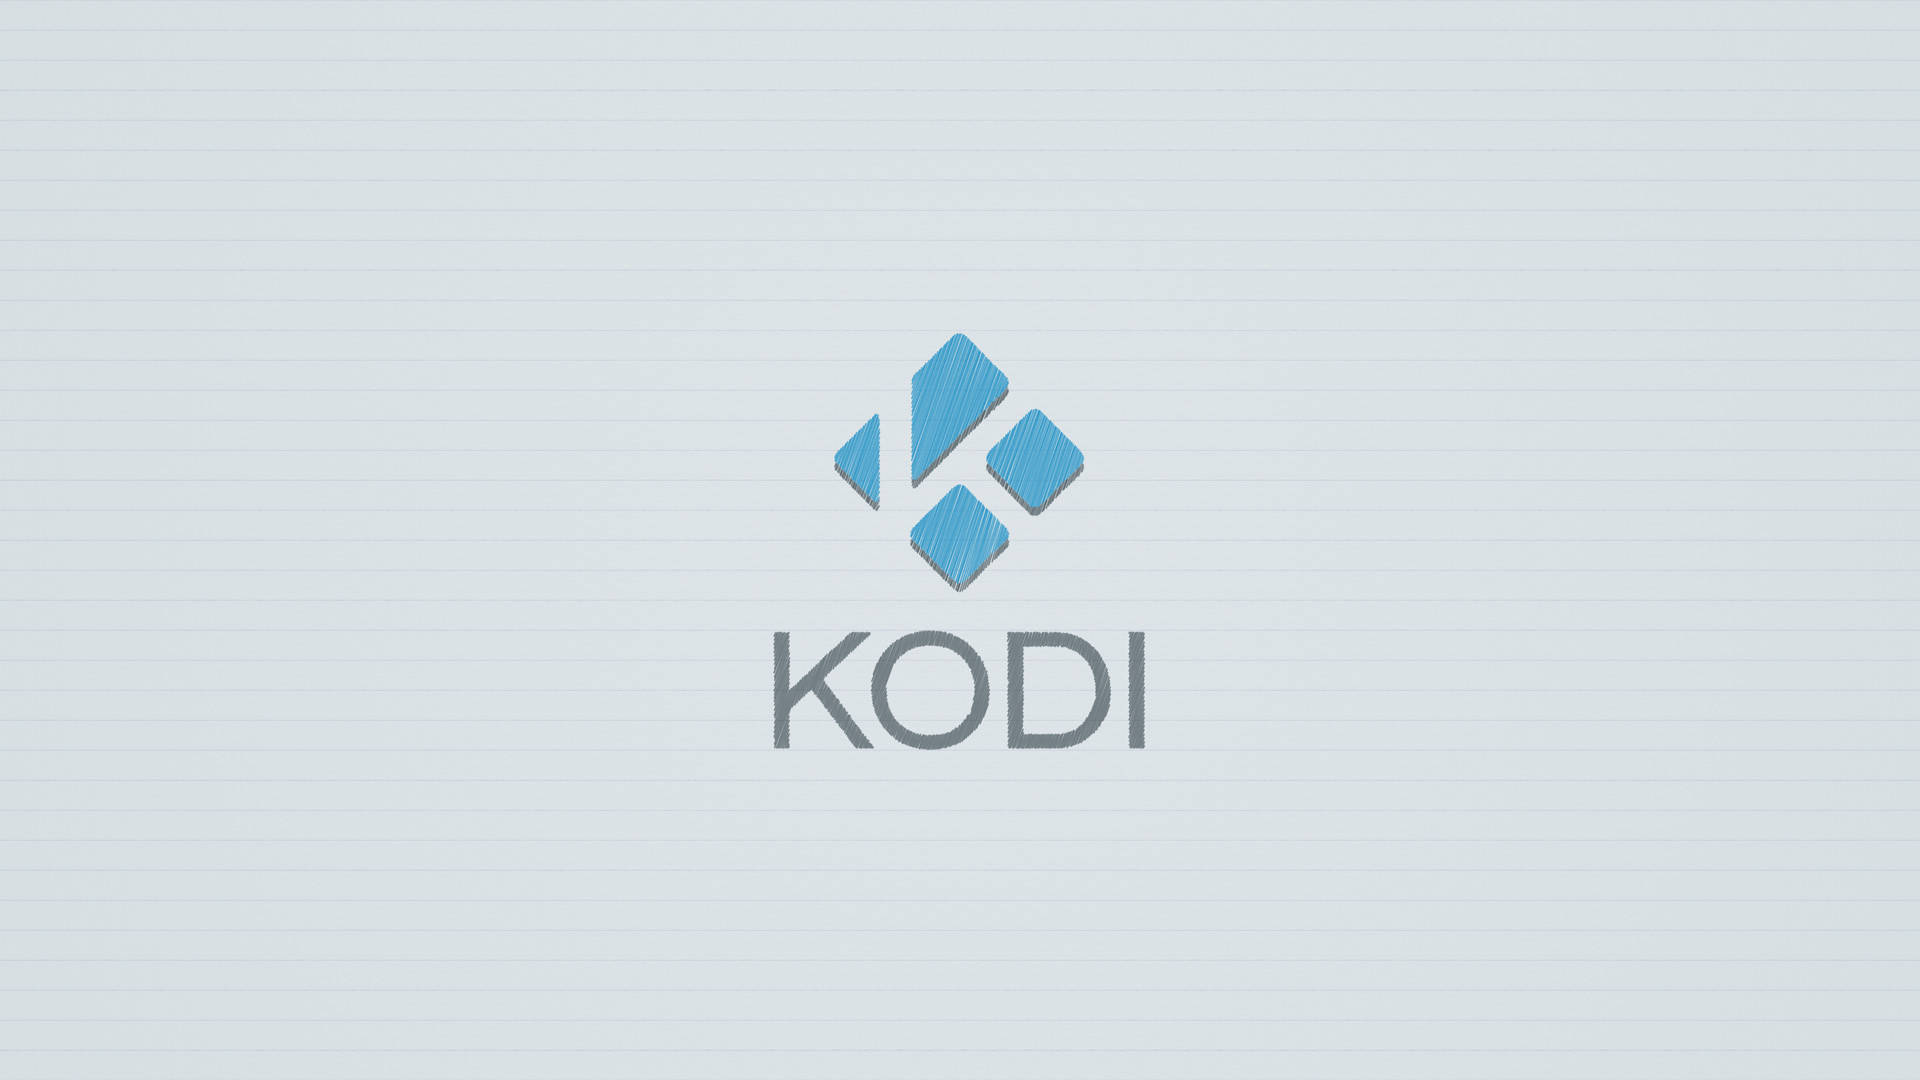 Download Kodi Logo On White Background Wallpaper | Wallpapers.com